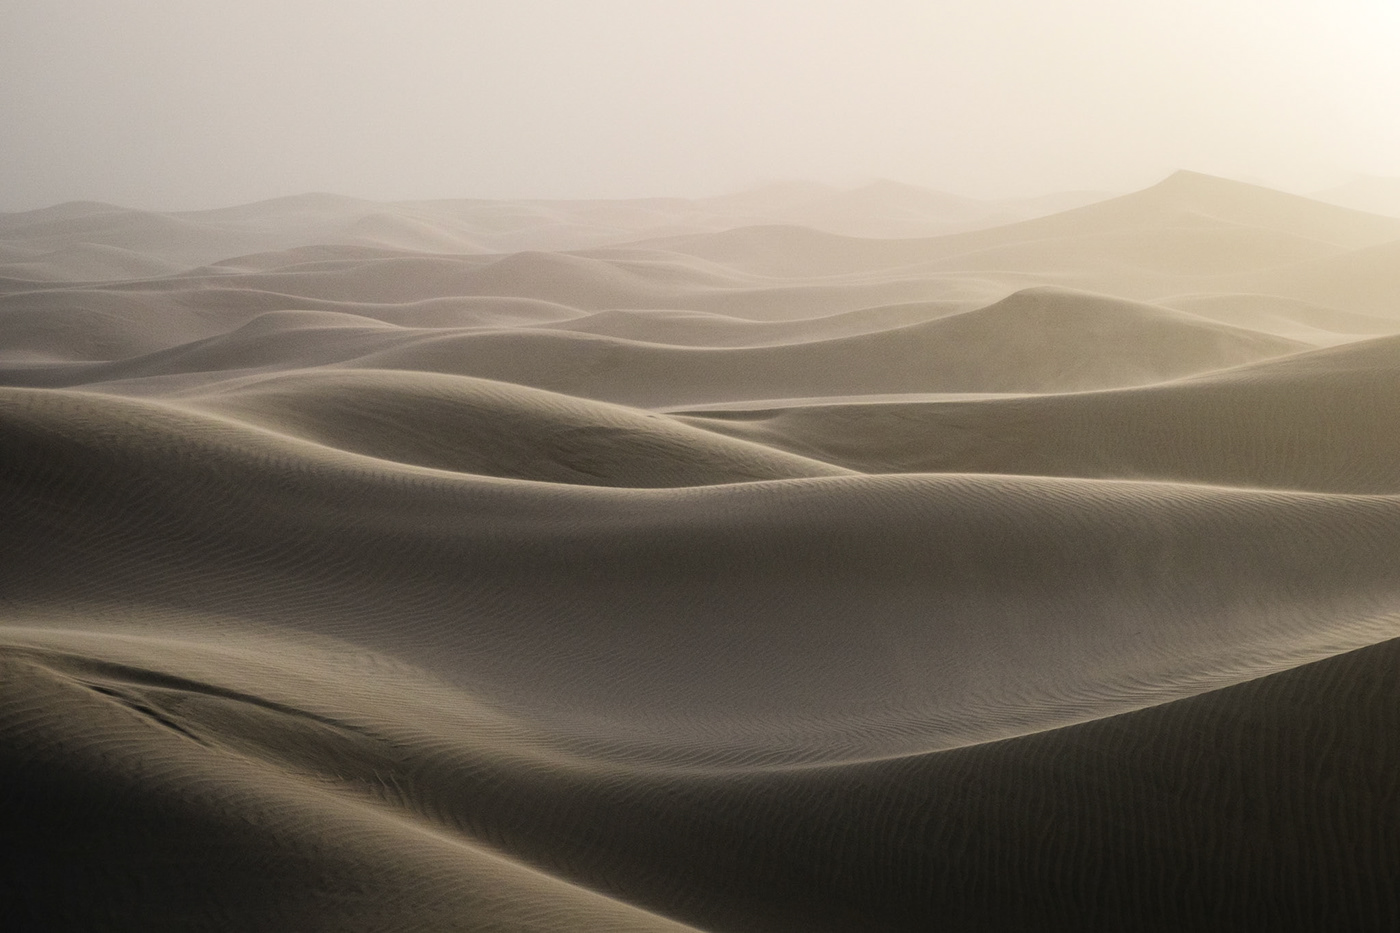 Sandstormes in the dunes of the Mesquite Sand Dunes, Death Valley